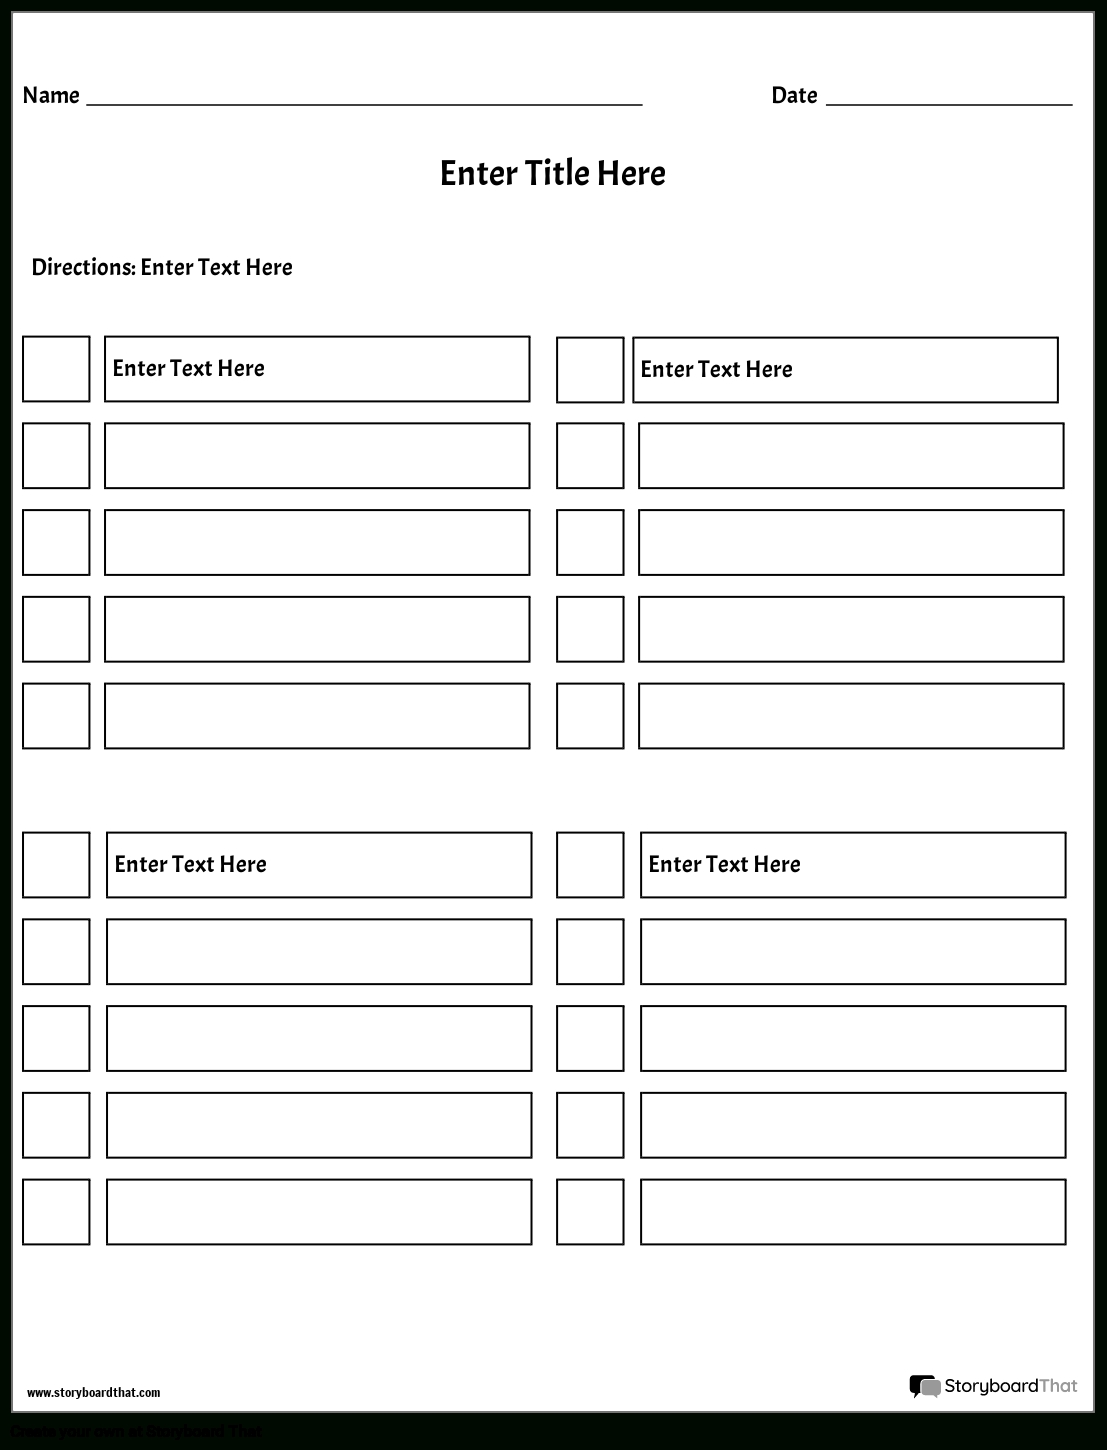 Blank Checklist Template | Create Checklist Templates Throughout Blank Checklist Template Word